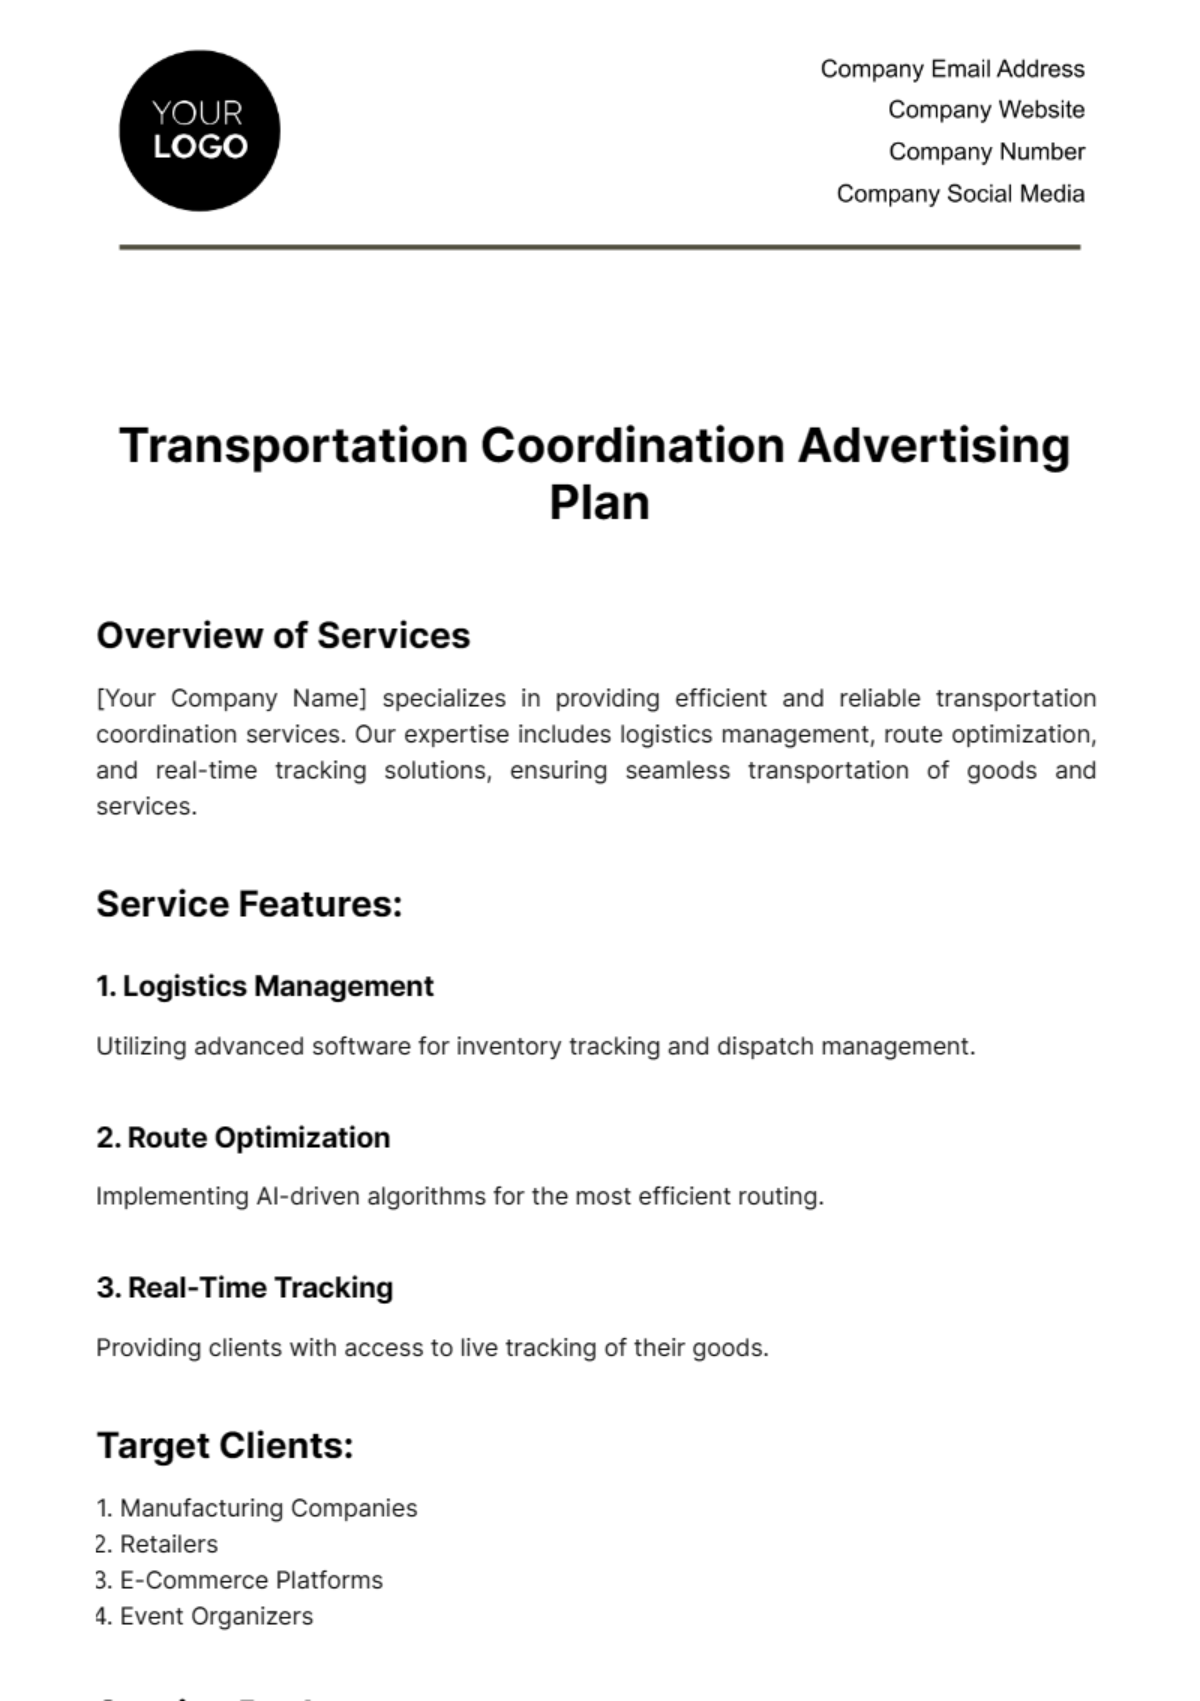 Free Transportation Coordination Advertising Plan Template